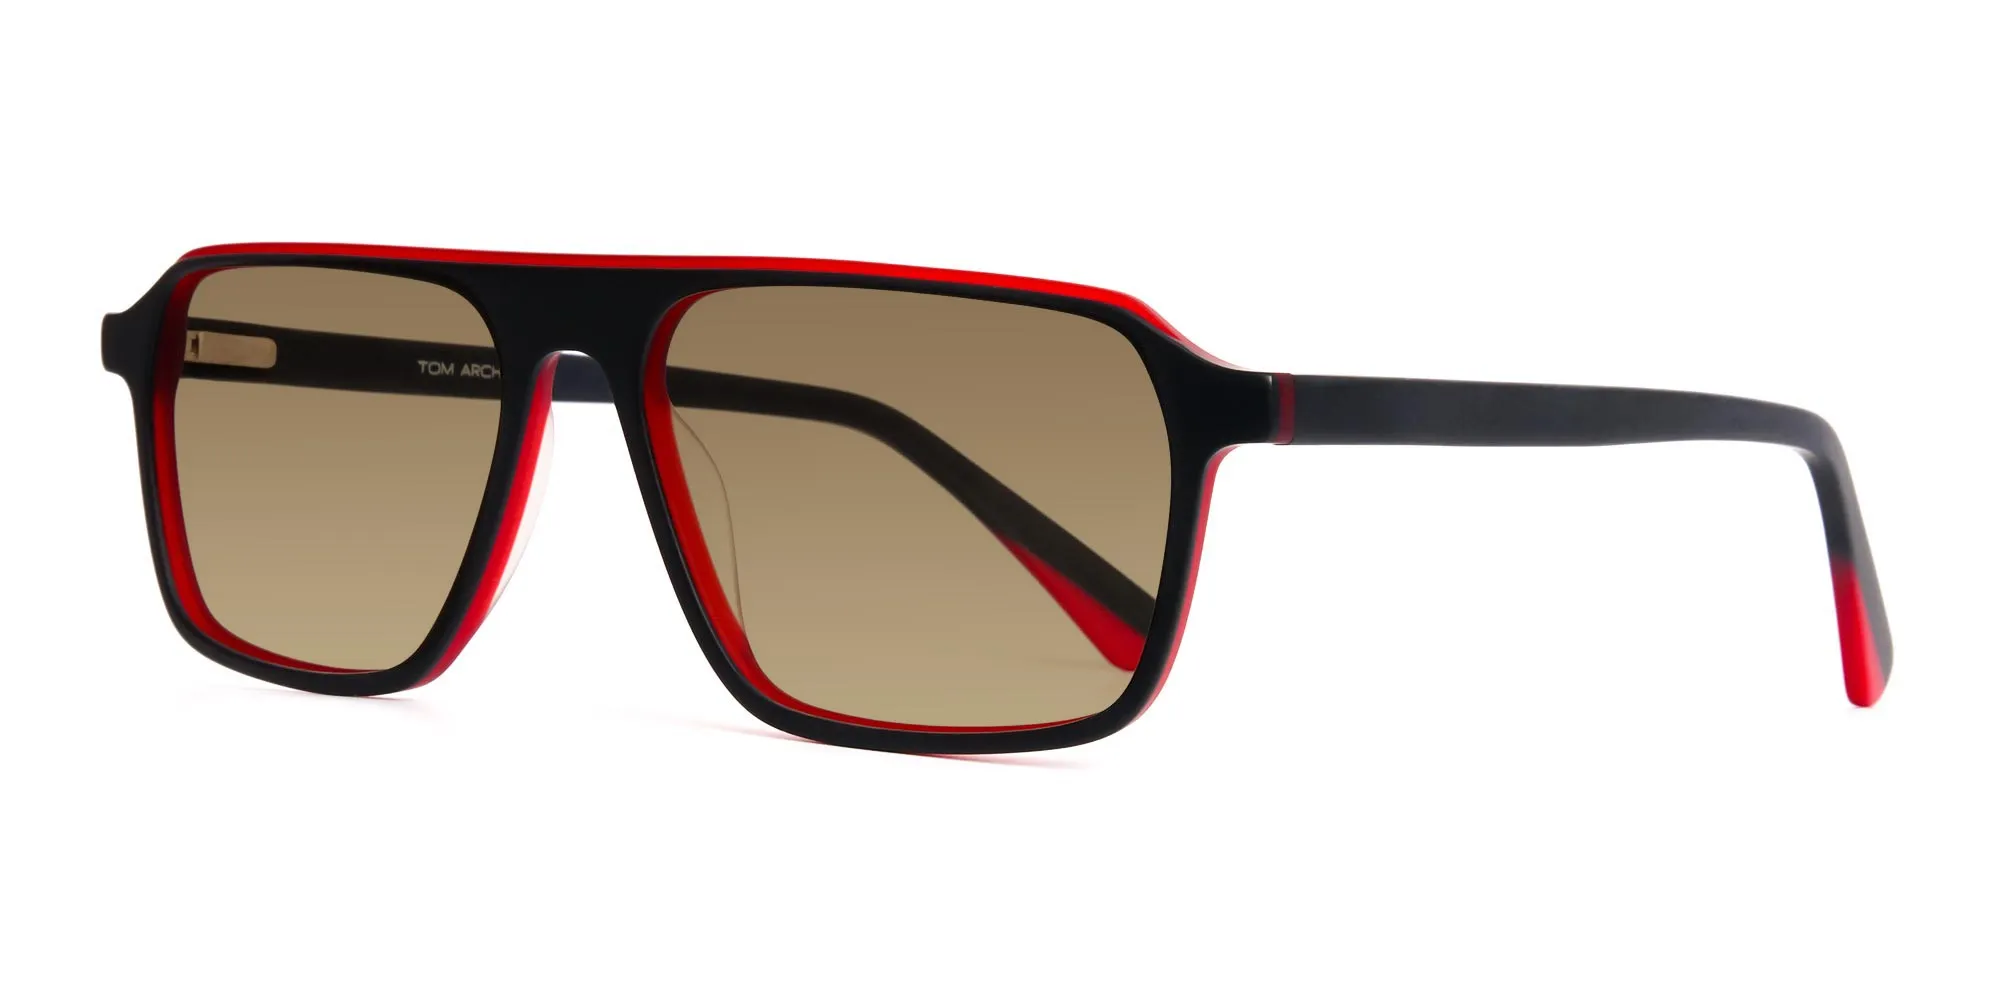 black-and-red-rectangular-full-rim-brown-tinted-sunglasses-frames-2